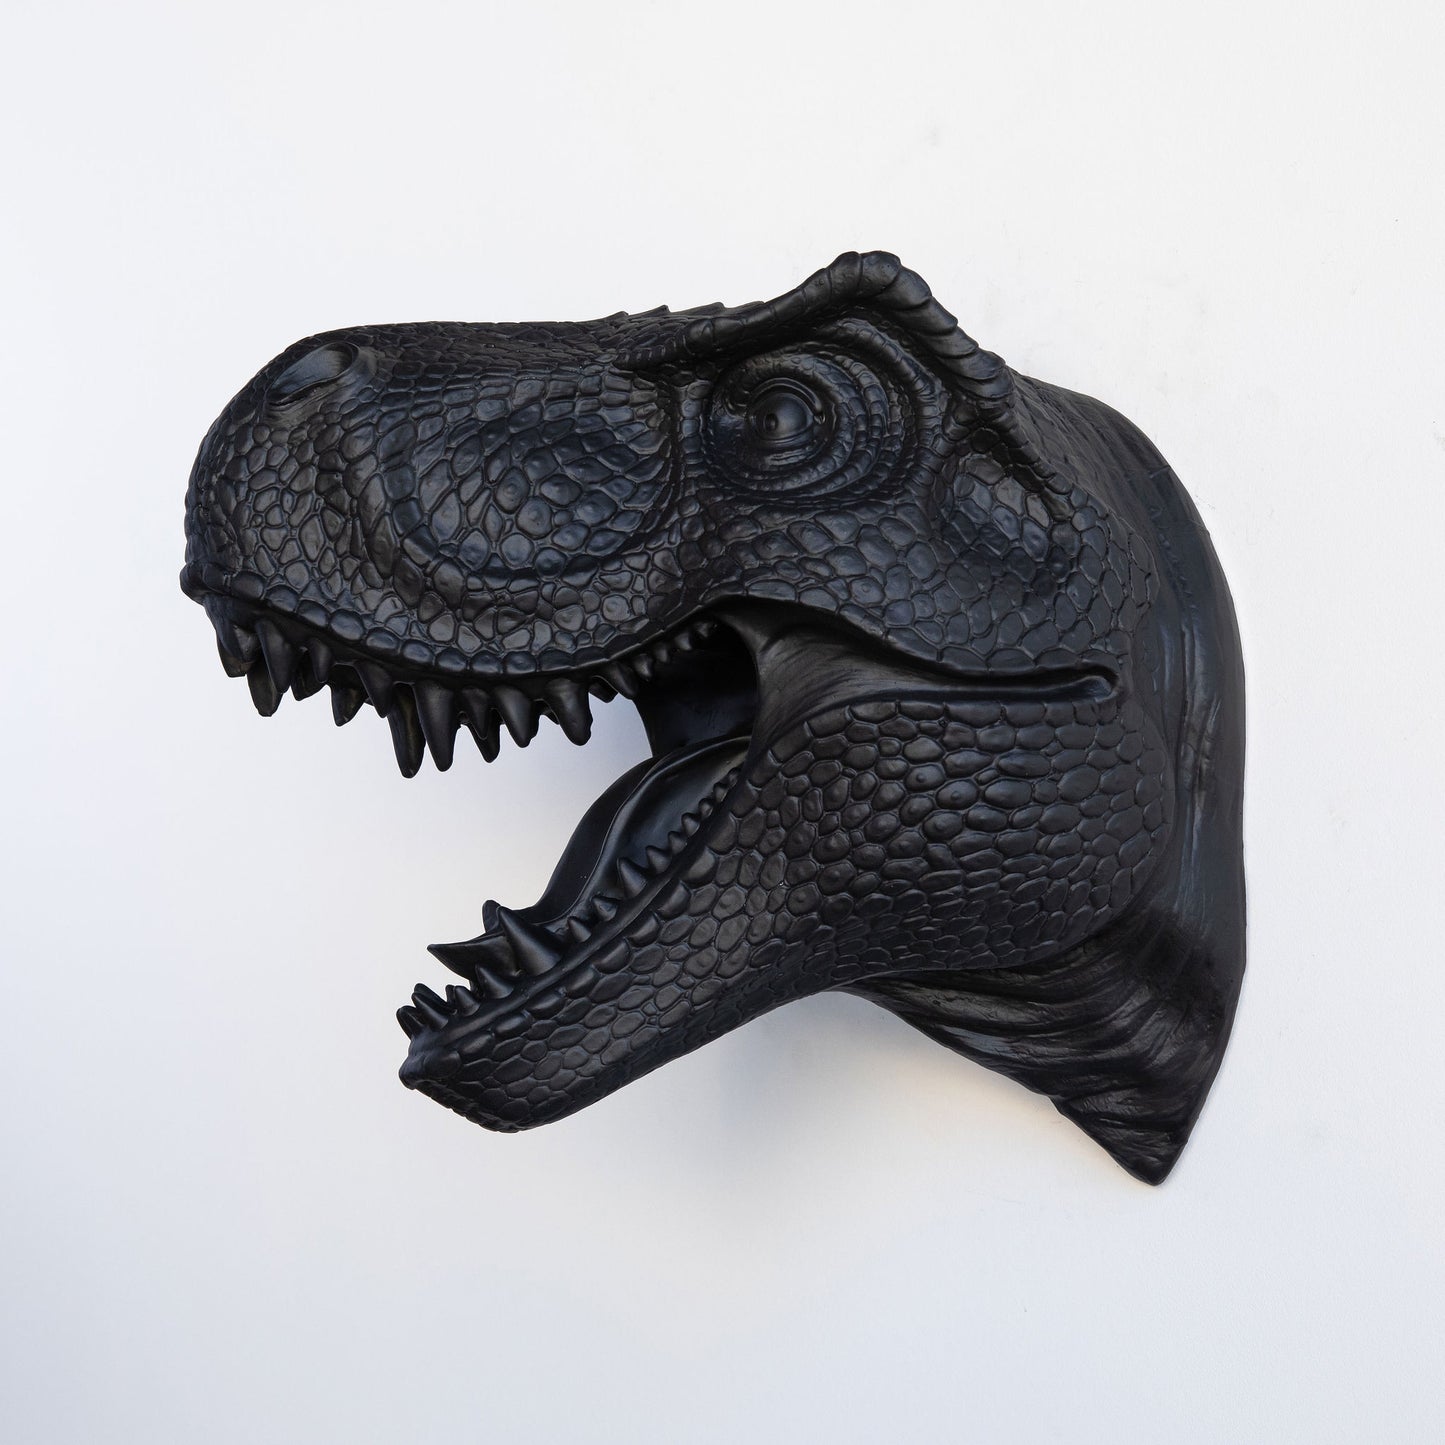 T-Rex Dinosaur Head Wall Mount // Black